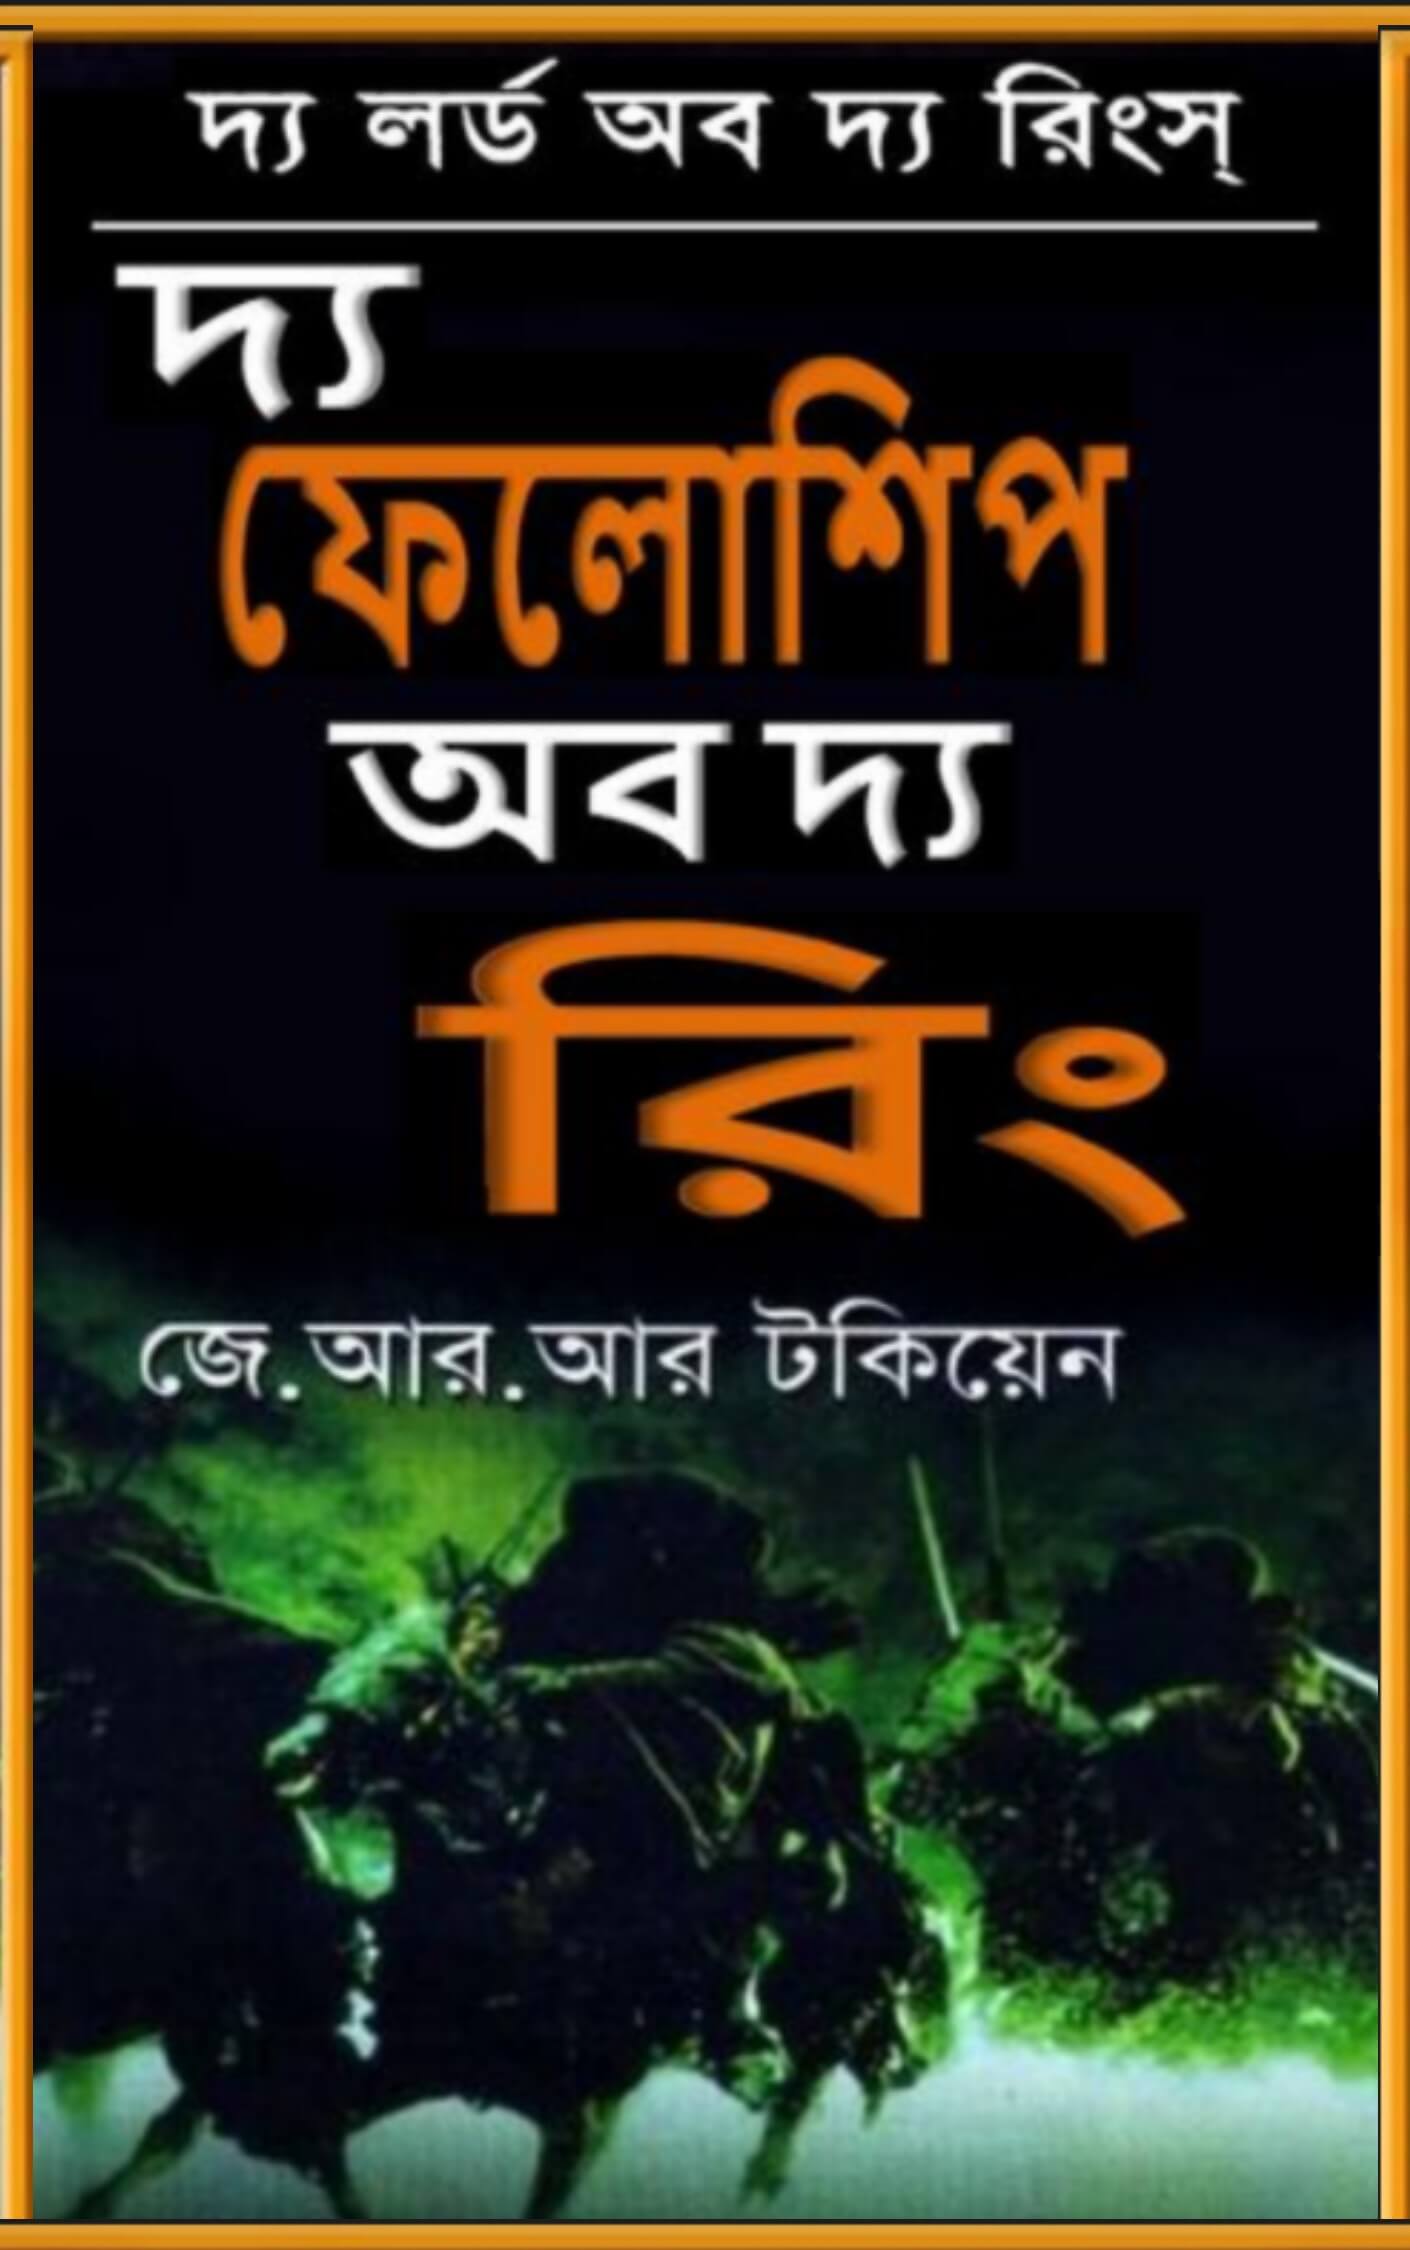 bengali books pdf format download